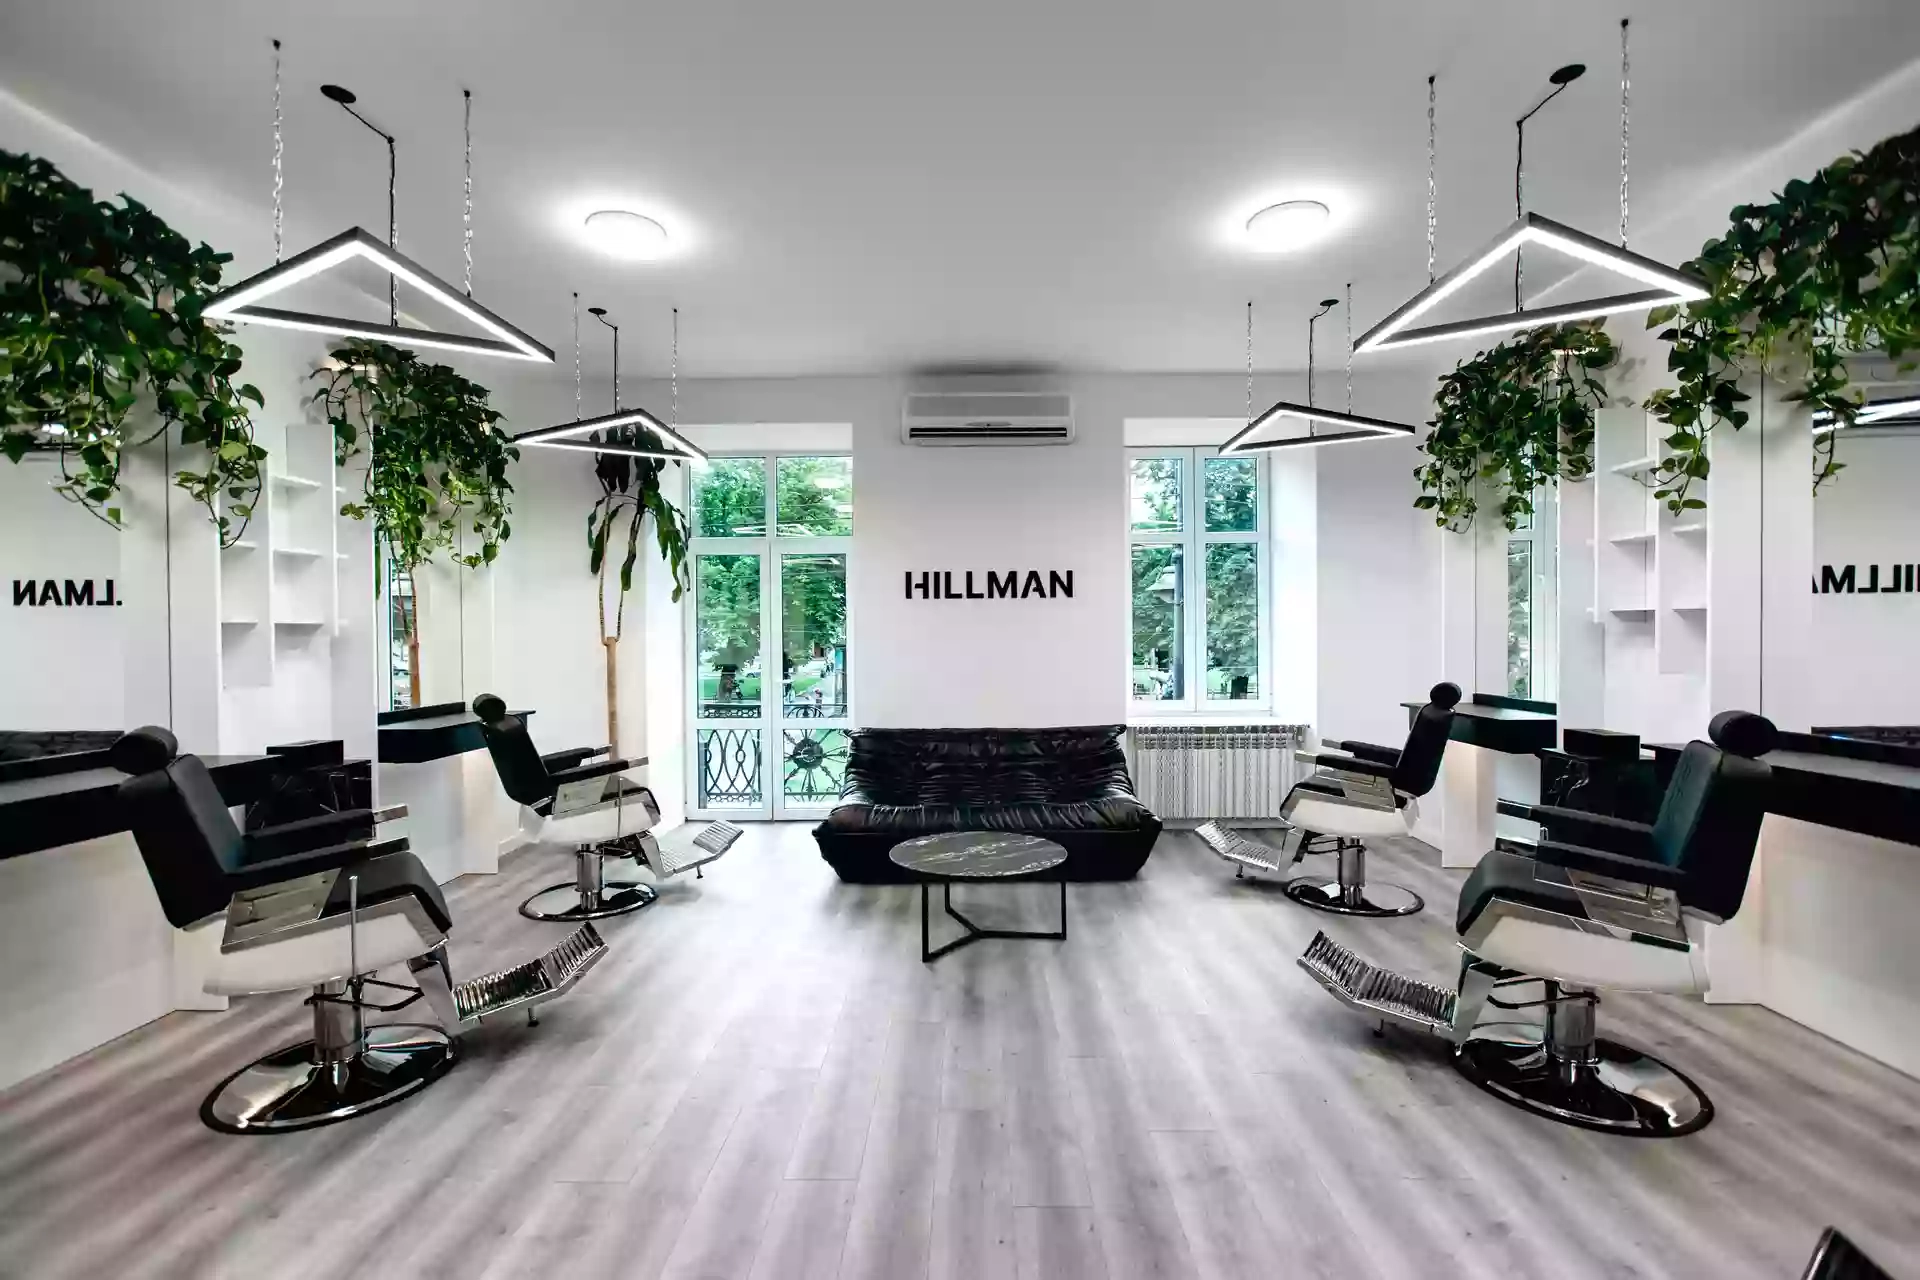 HILLMAN Barbershop